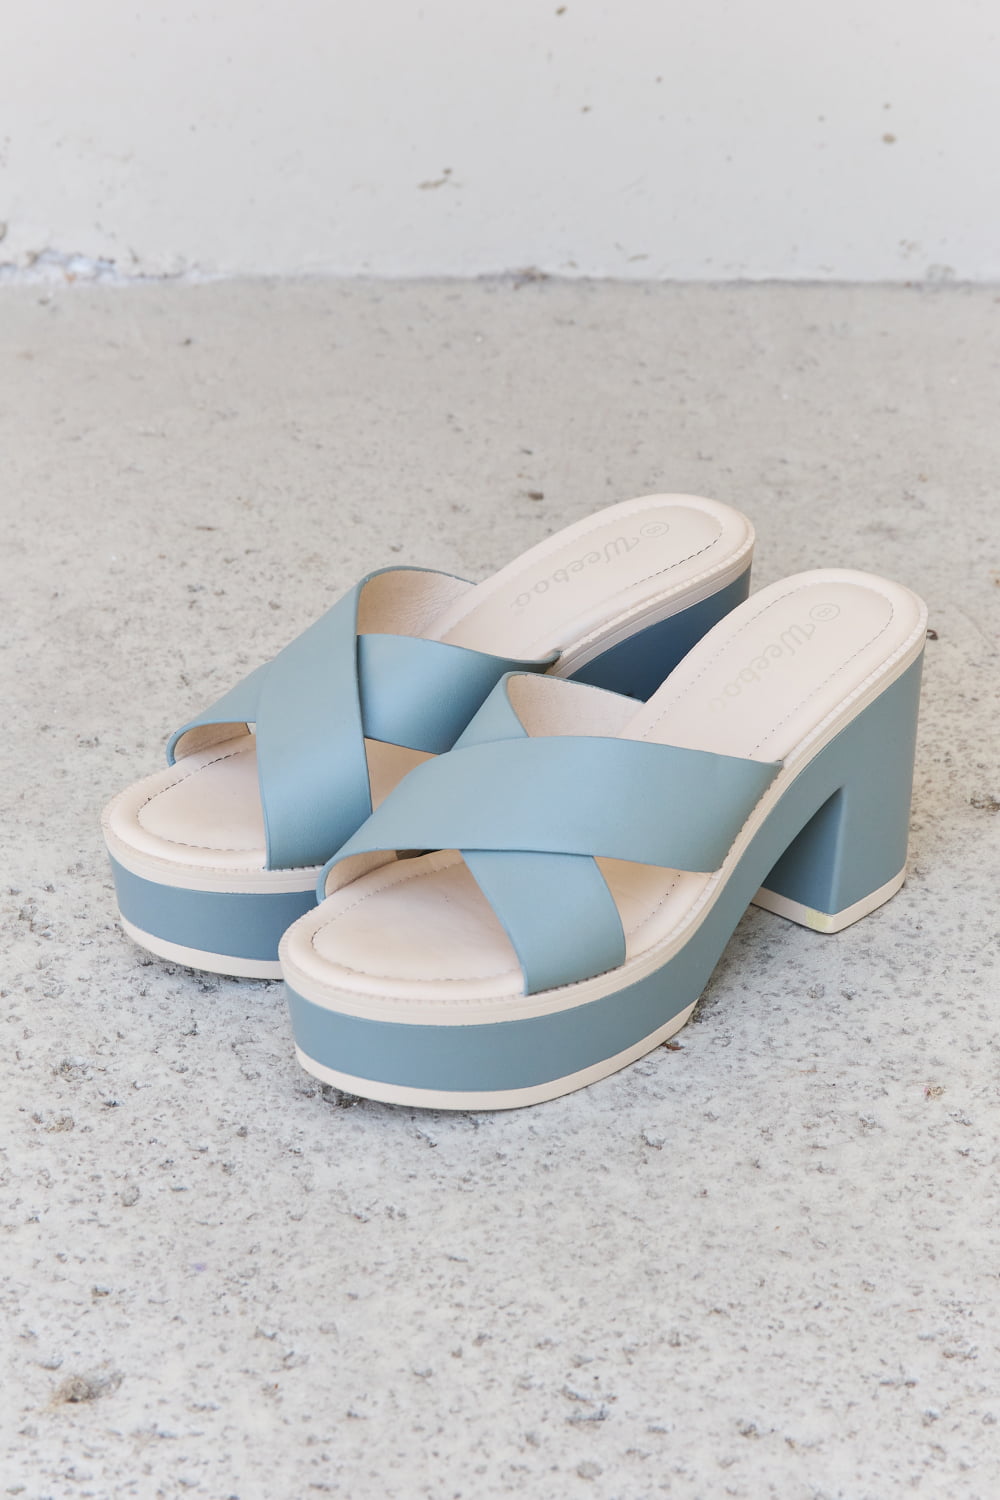 Weeboo Contrast Platform Slide On Slip In Cross Strap Thick Sole High Heel Sandals in Misty Blue